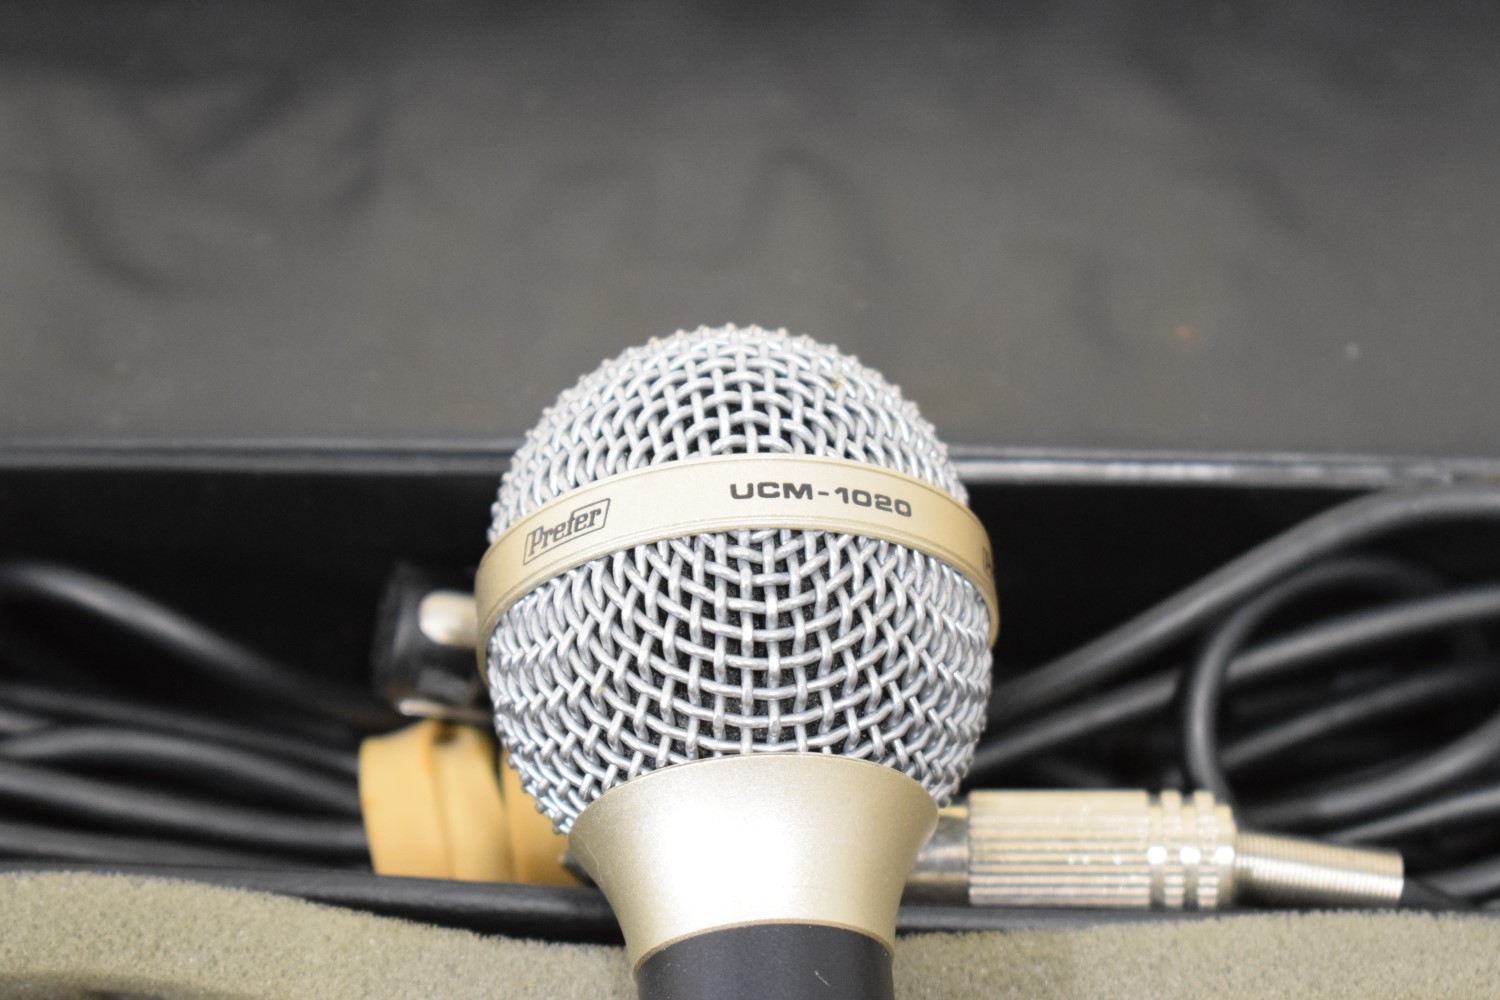 Prefer UCM-1020 Mikrofon – In Originale Verpackung